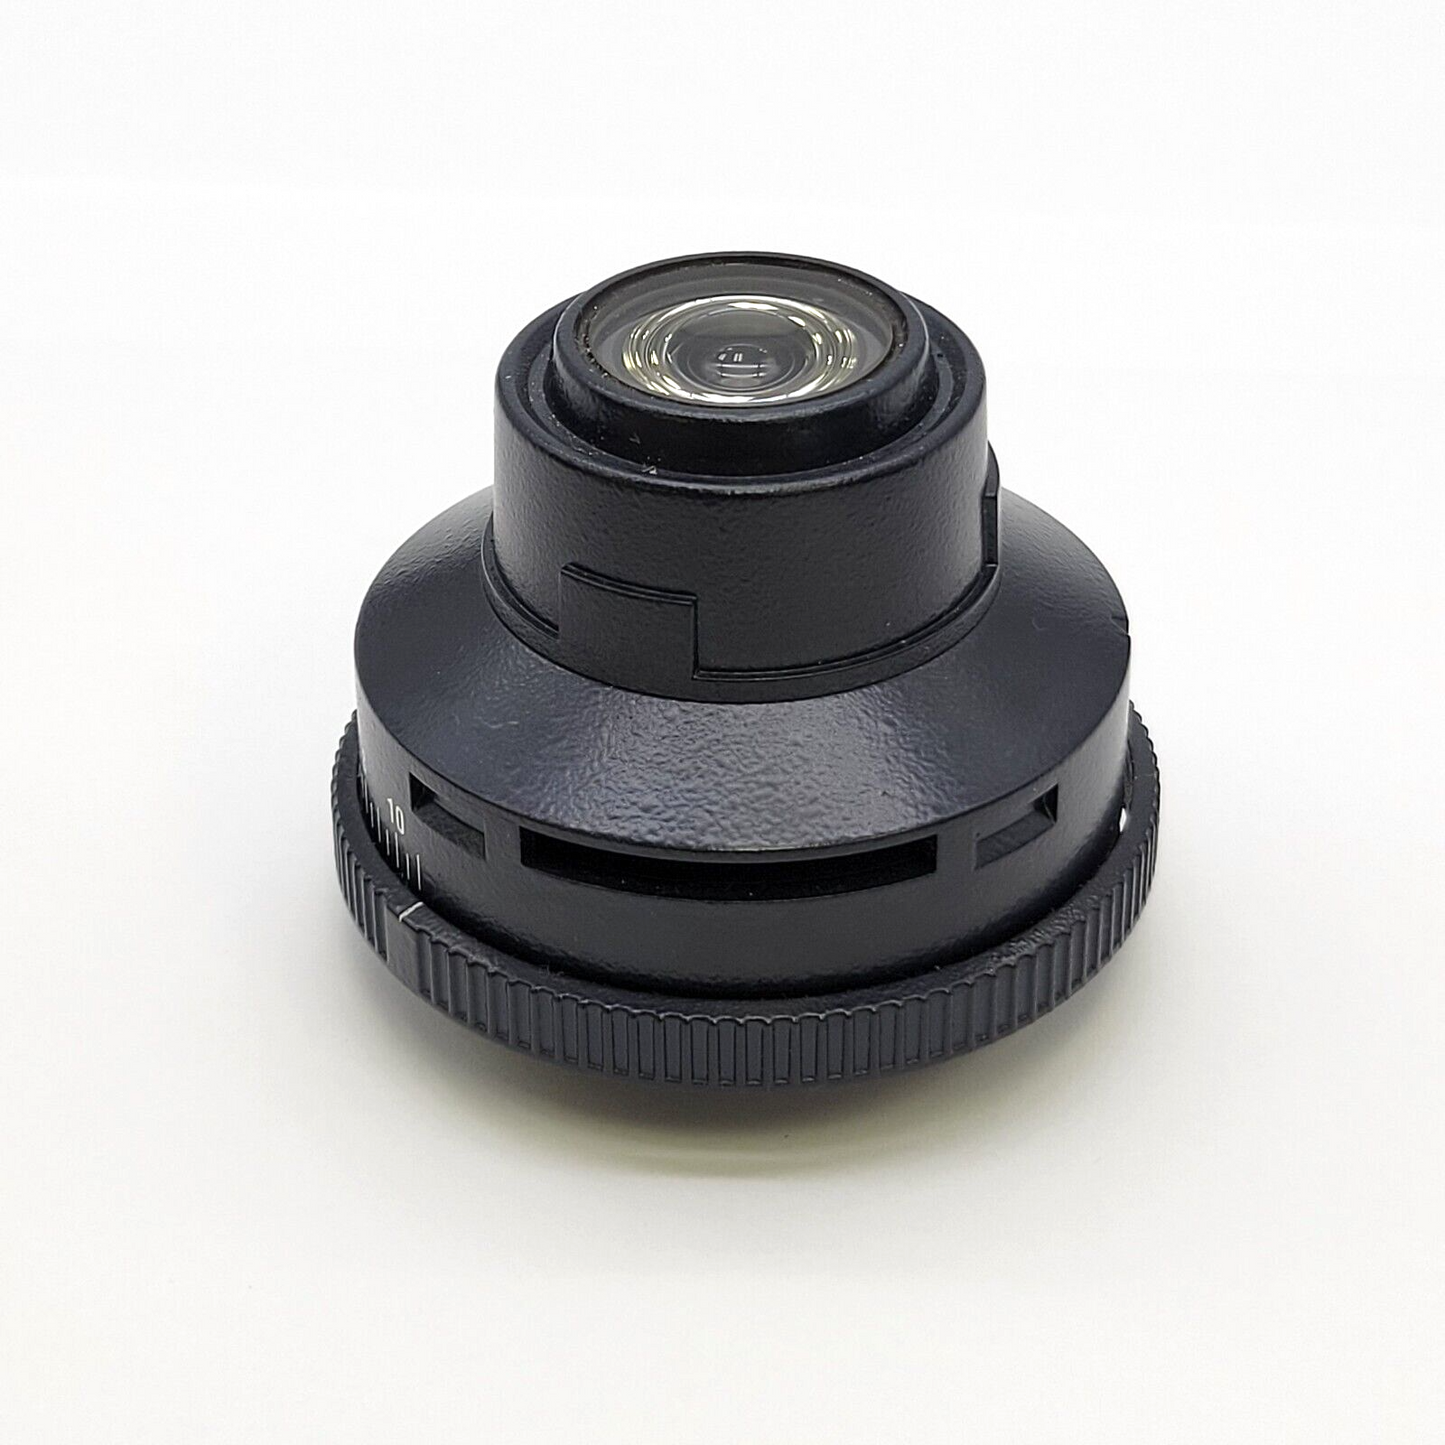 Leica Microscope Condenser 0.85 S1 for DM Series 11551042 - microscopemarketplace